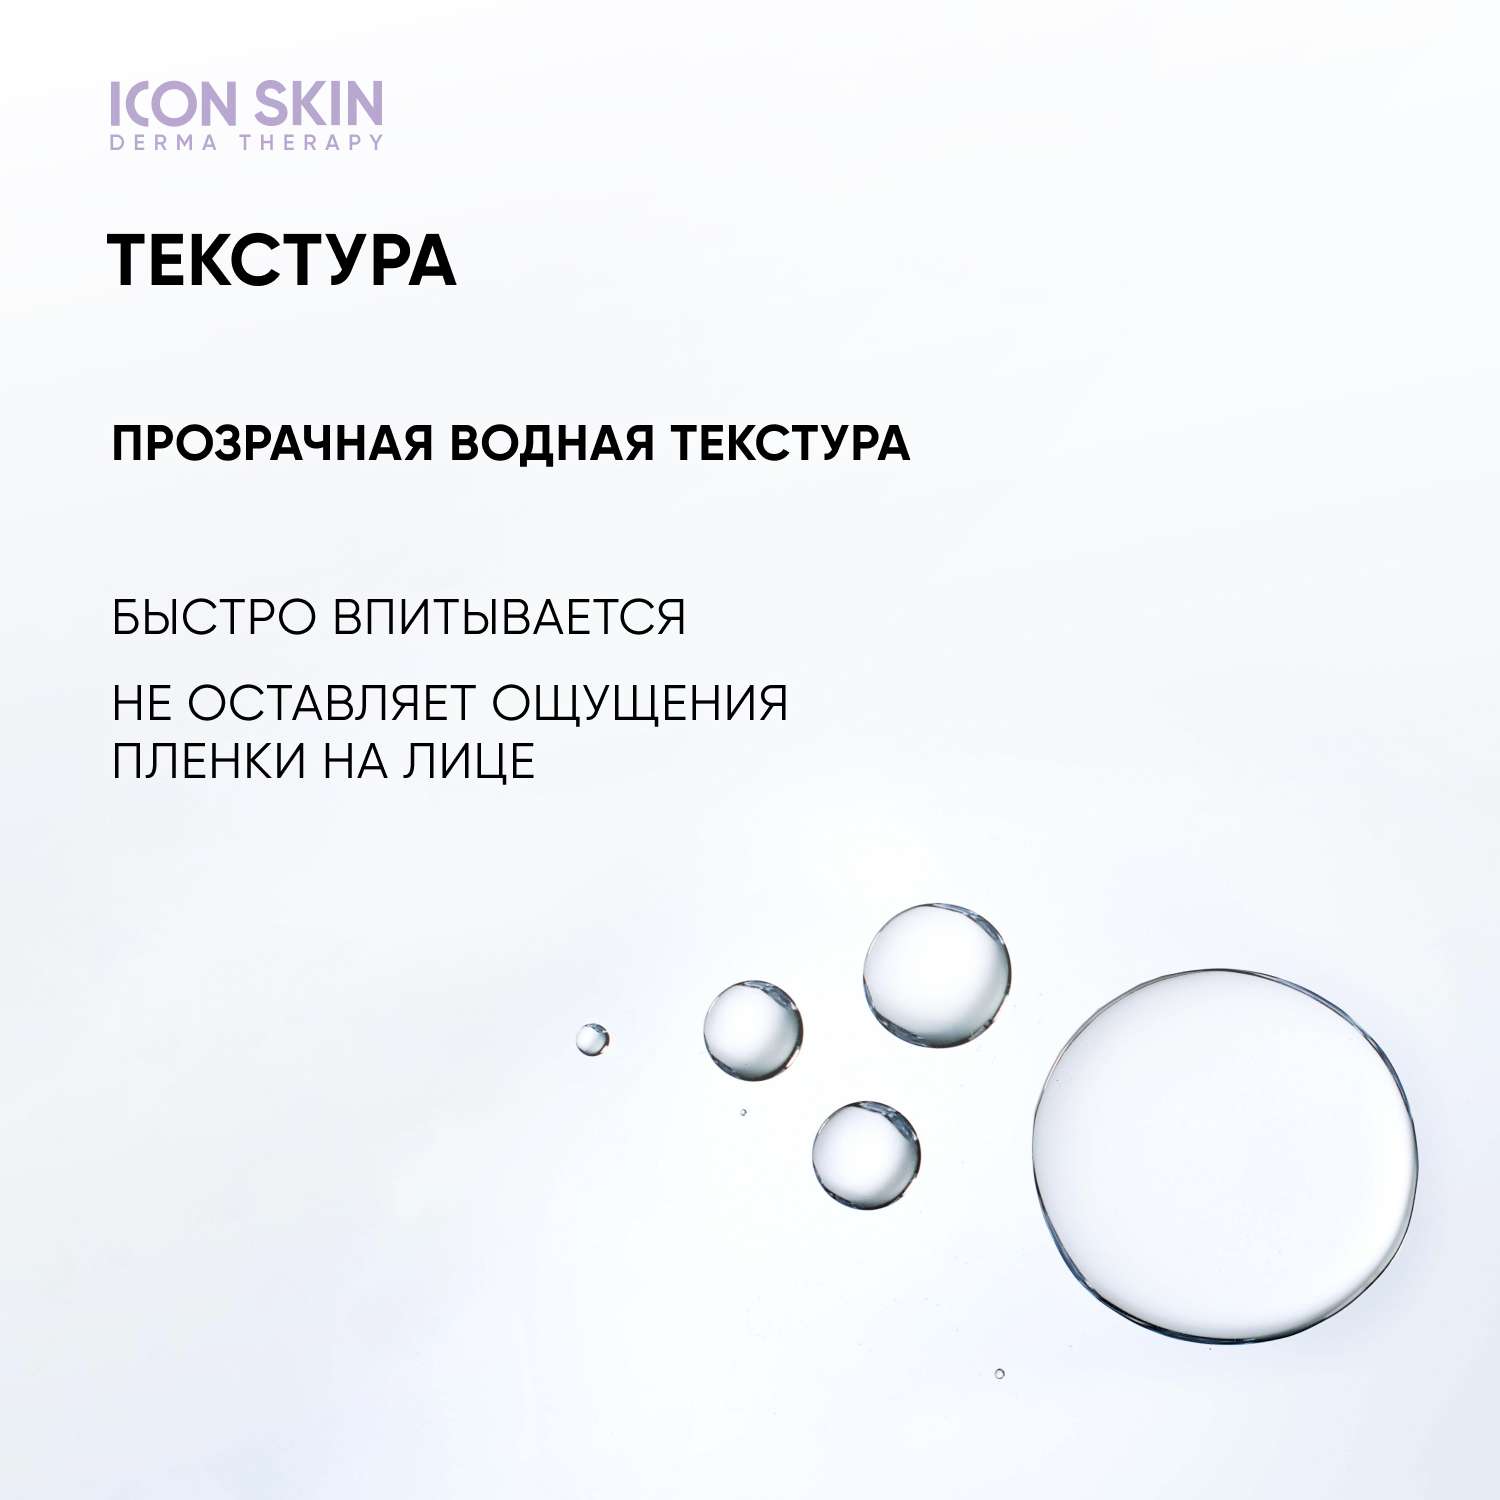 Увлажняющий тоник ICON SKIN Physio Tonic - фото 6